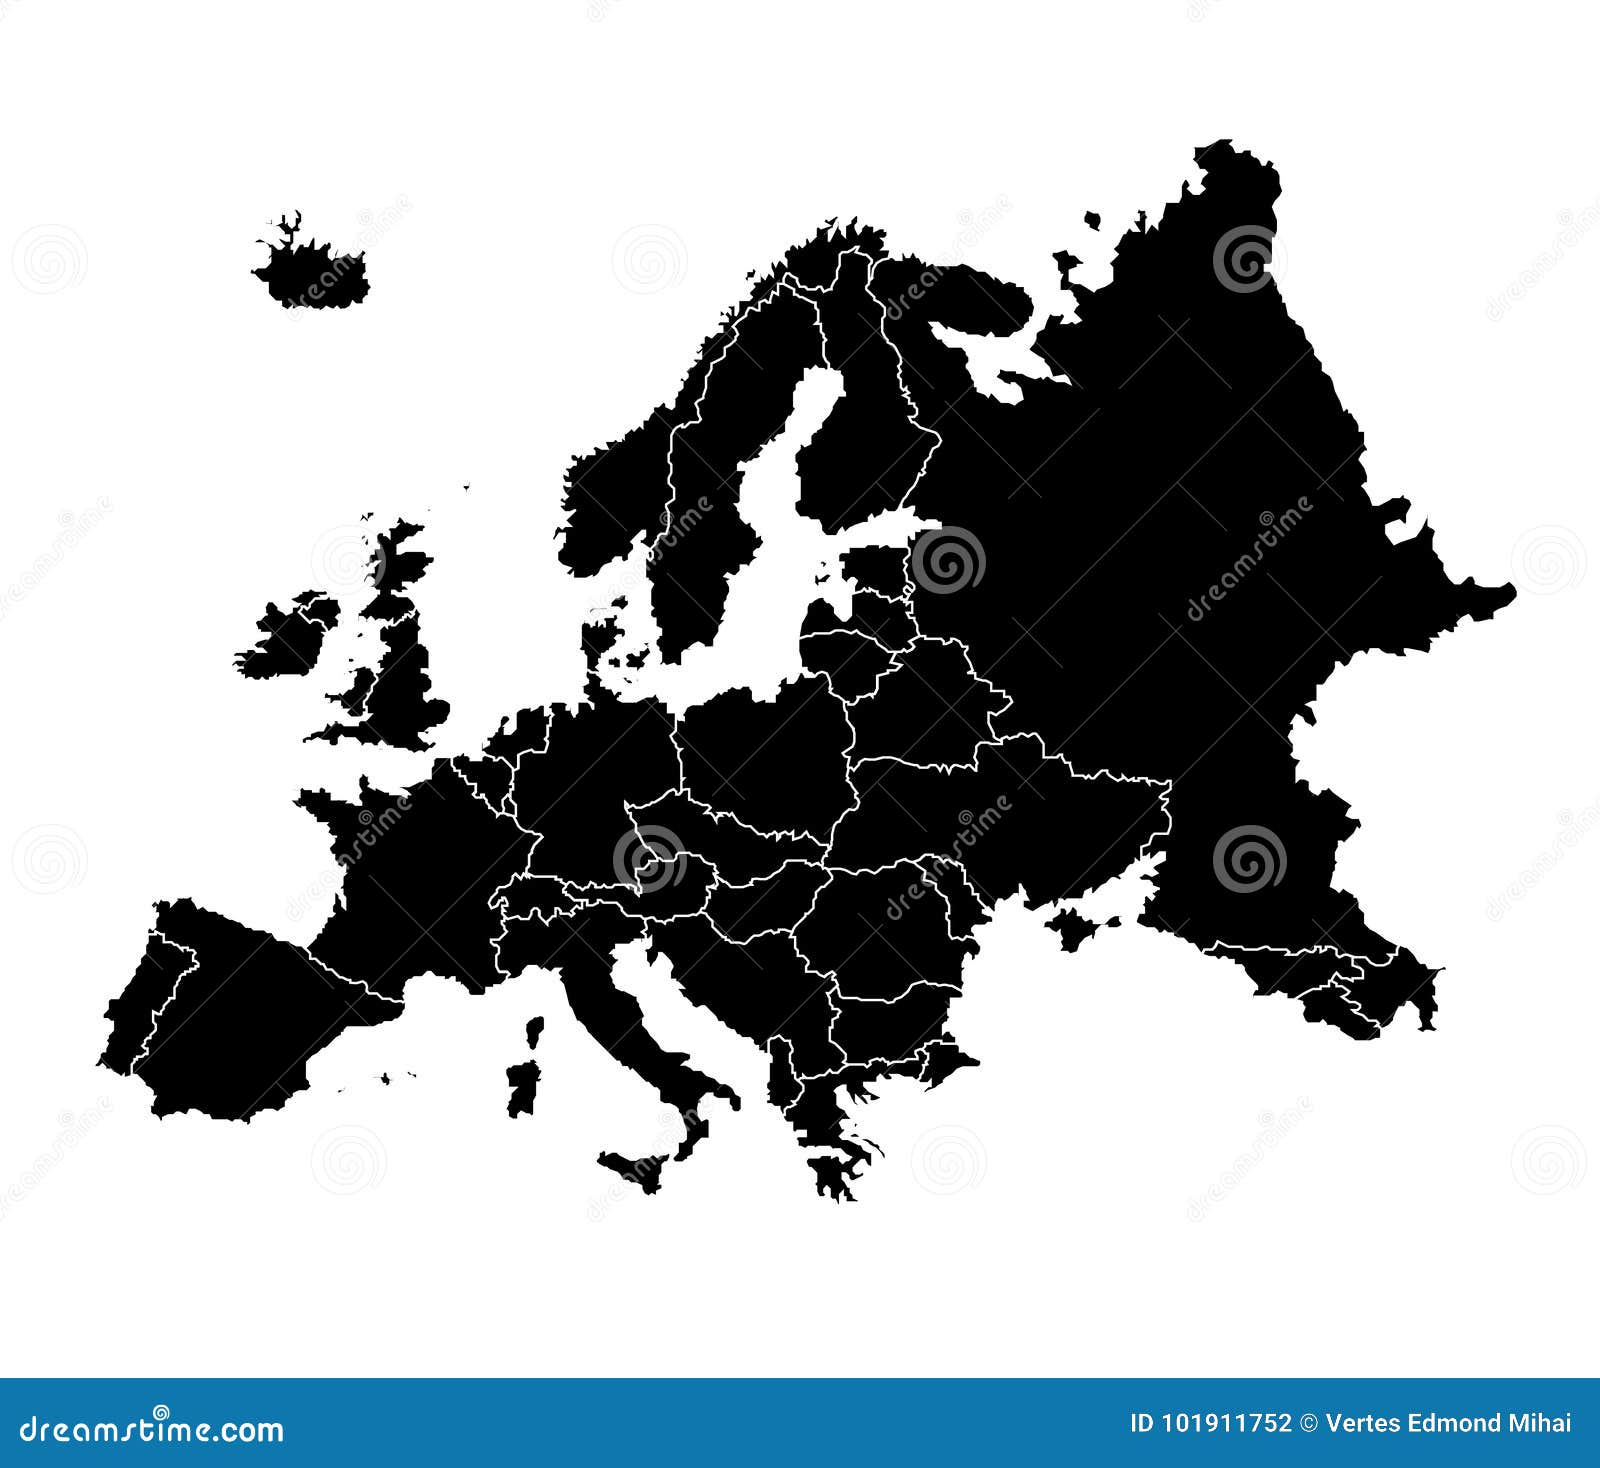 europa map  